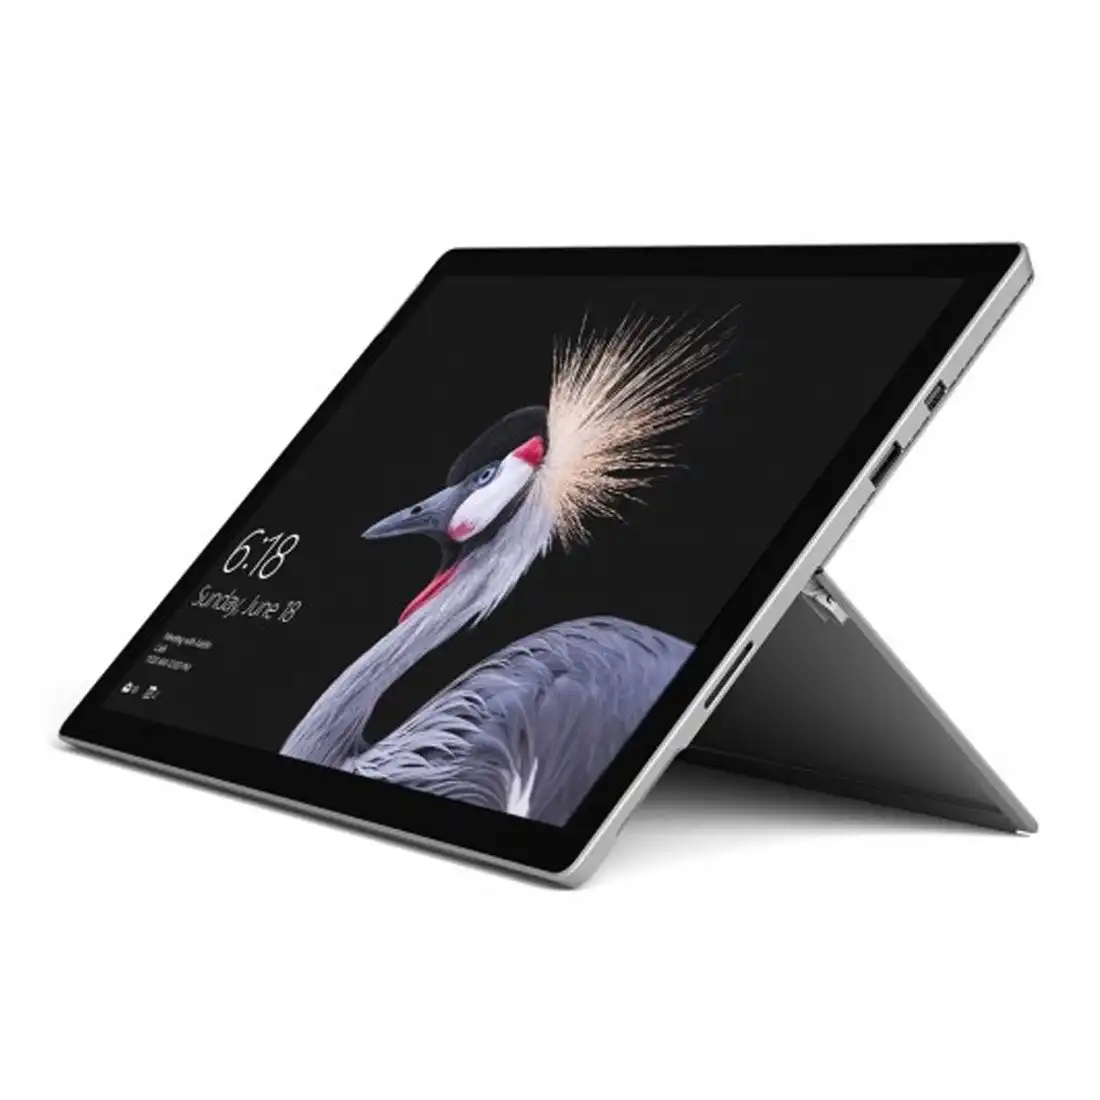 Microsoft Surface Pro (6th Gen) 12.3", i7-8650U, 256GB/8GB Platinum [Refurbished] - Excellent